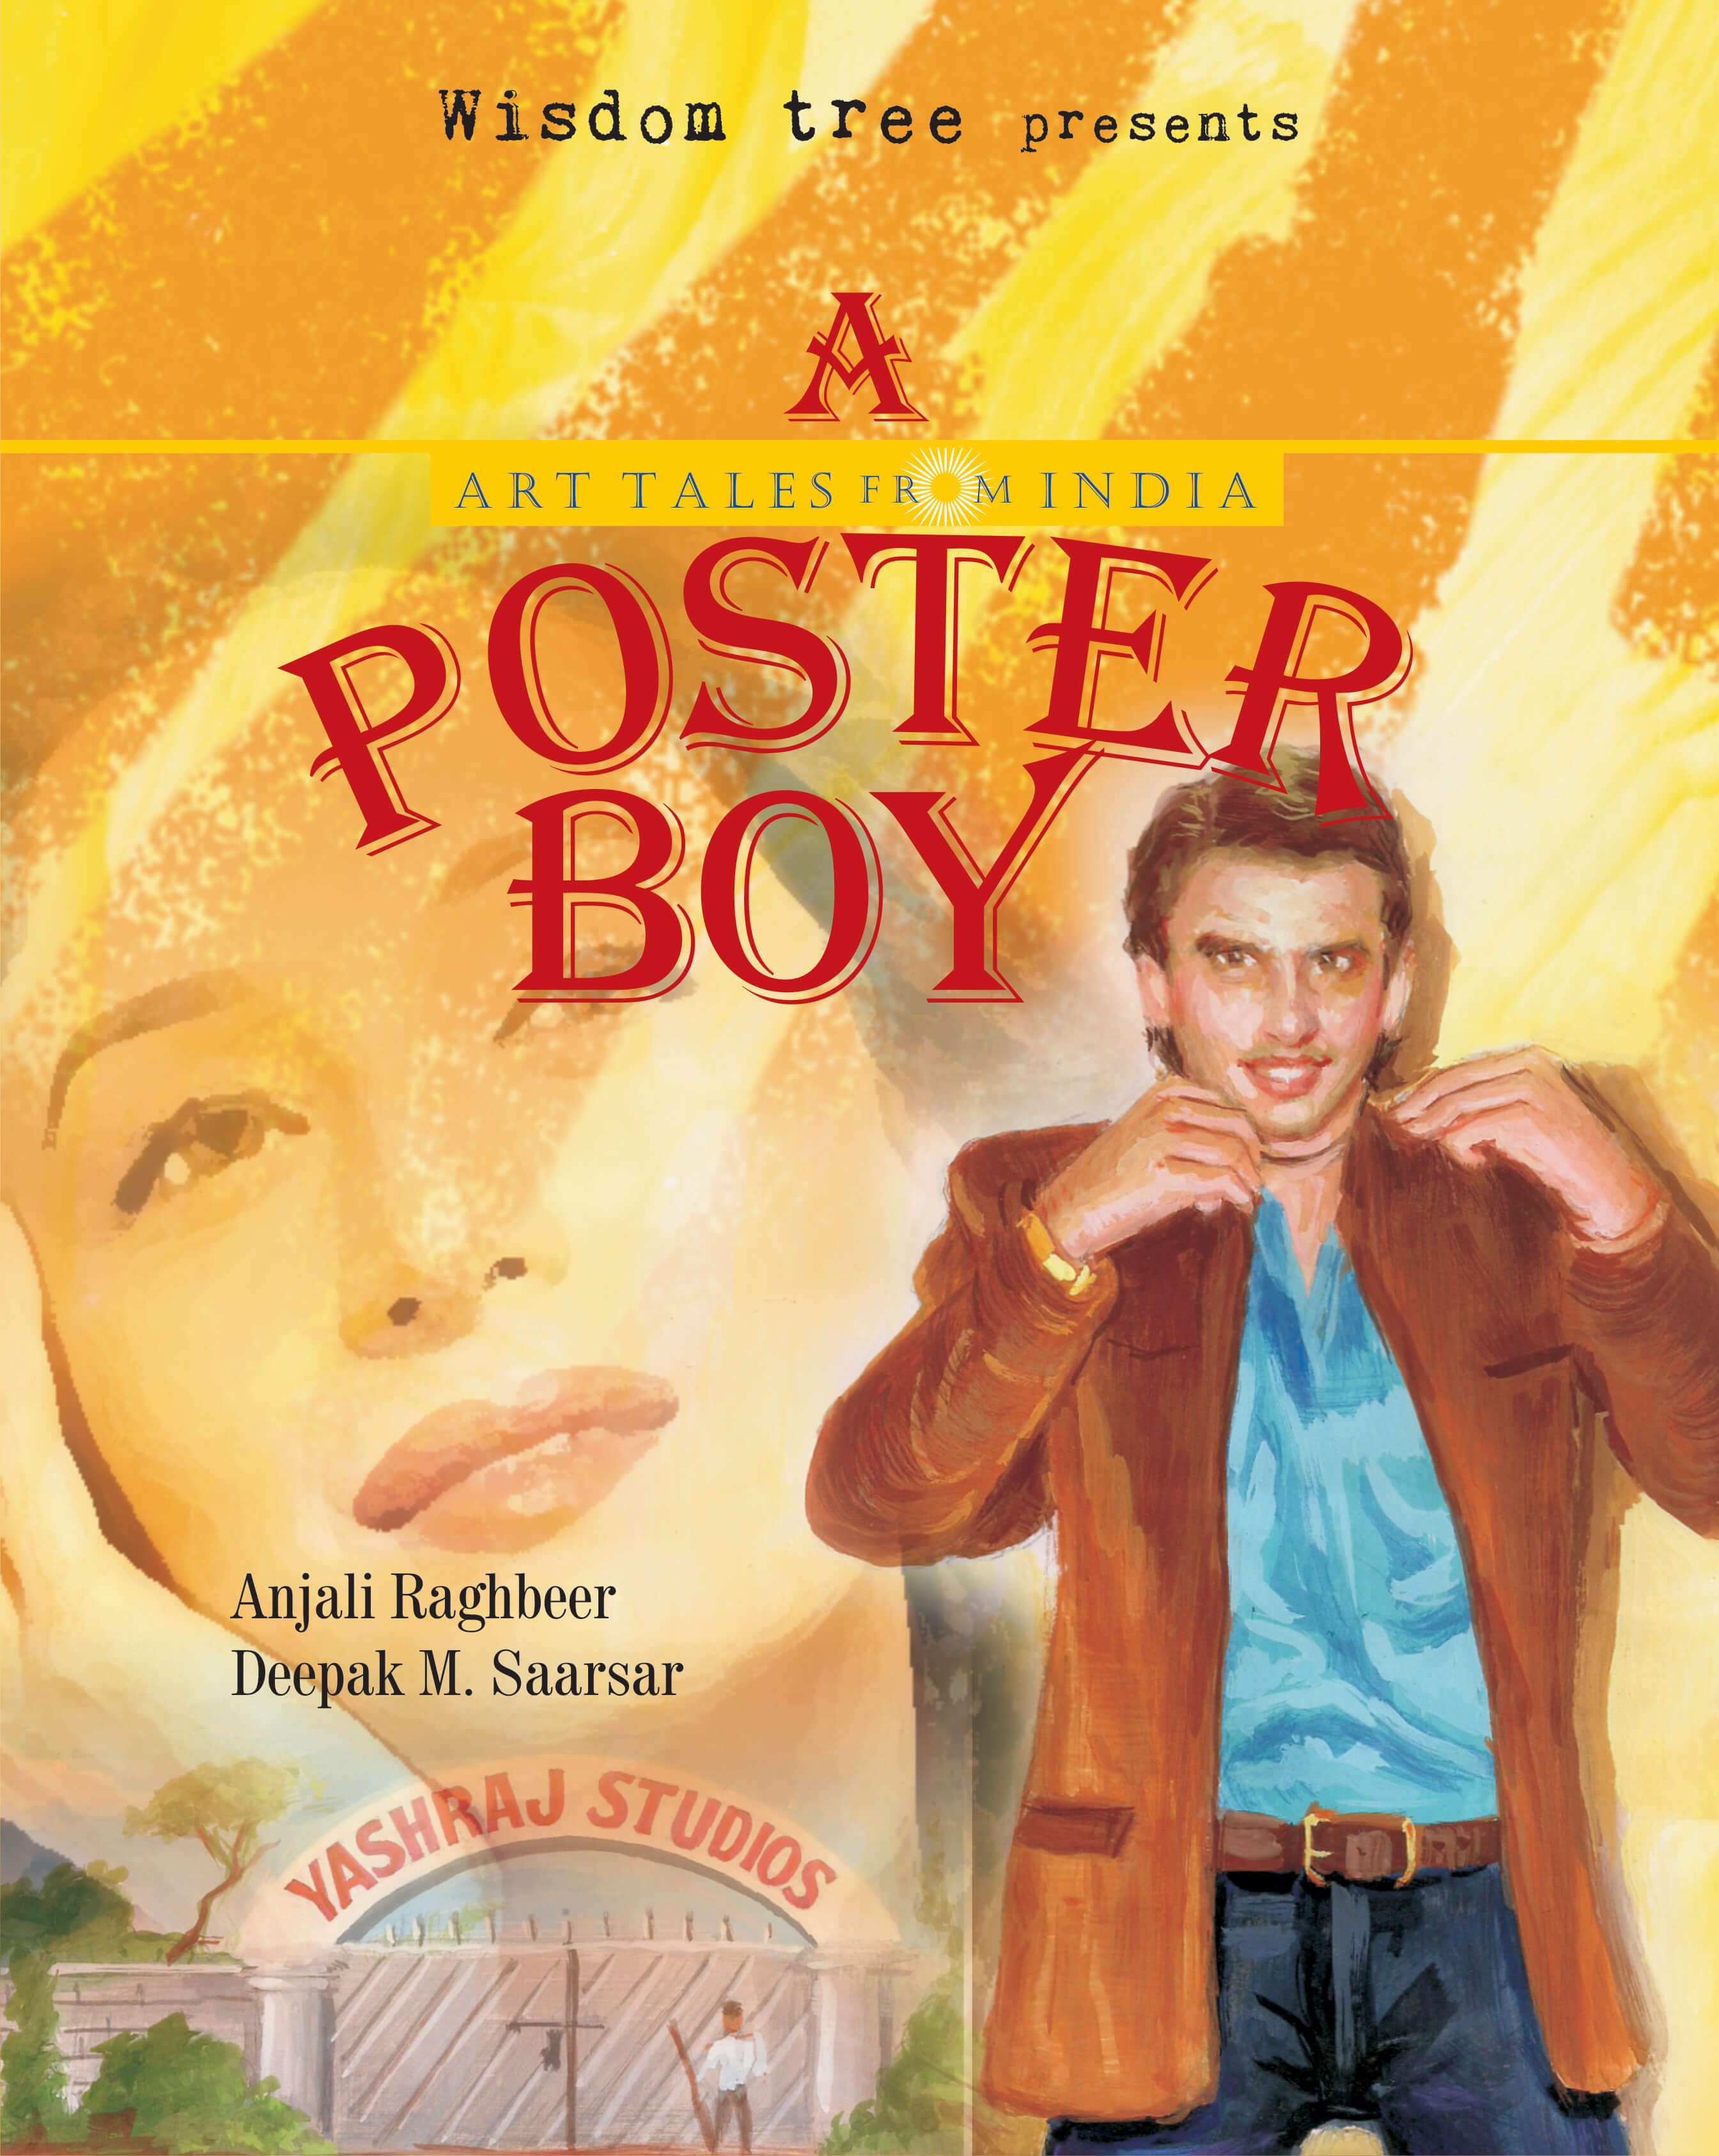 A Poster Boy